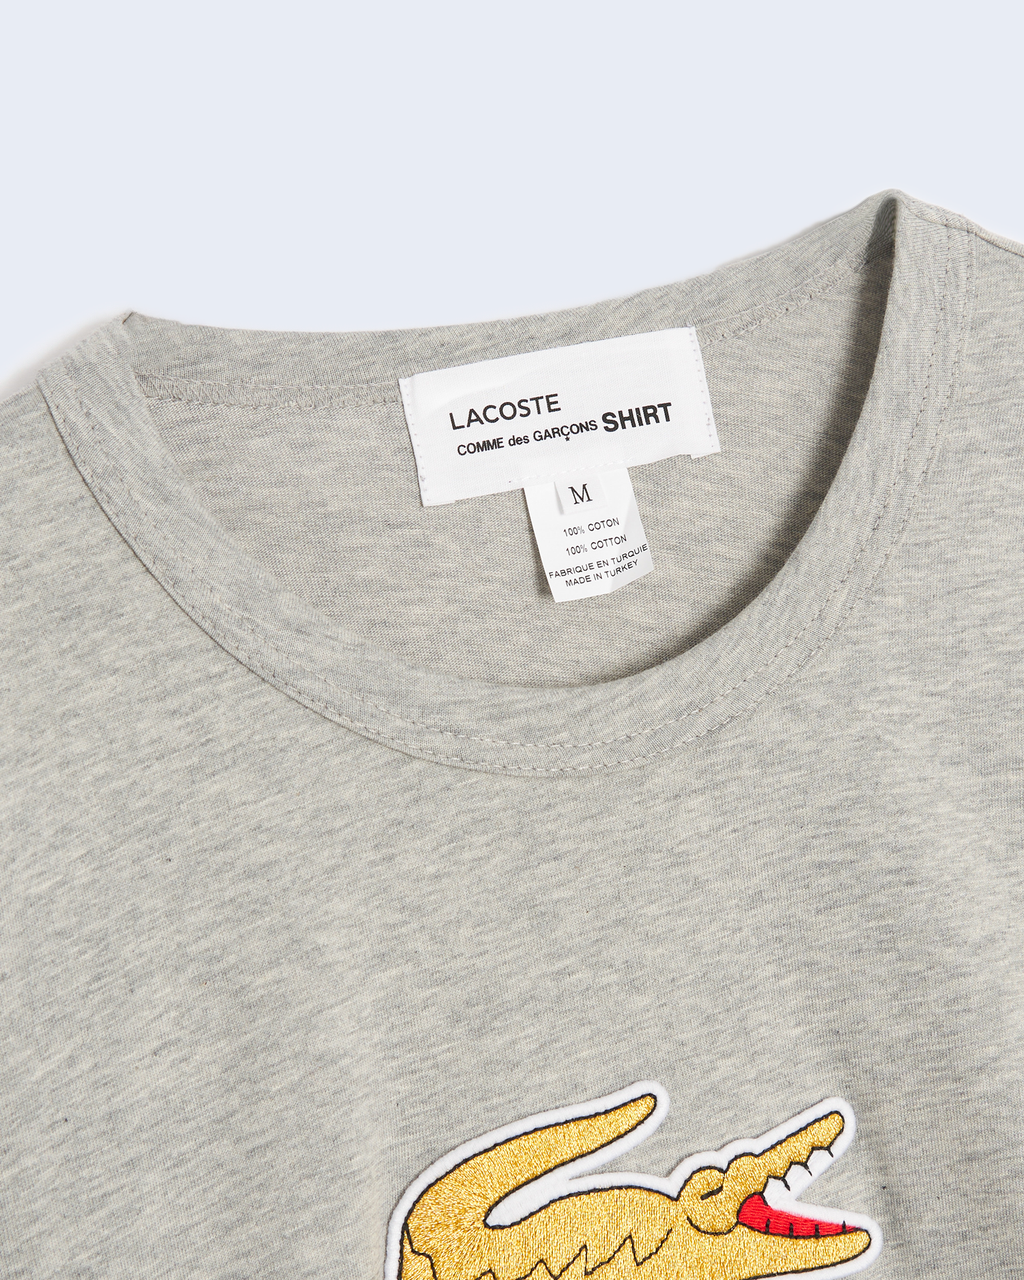 CDG Shirt x Lacoste Tee Gold / Grey